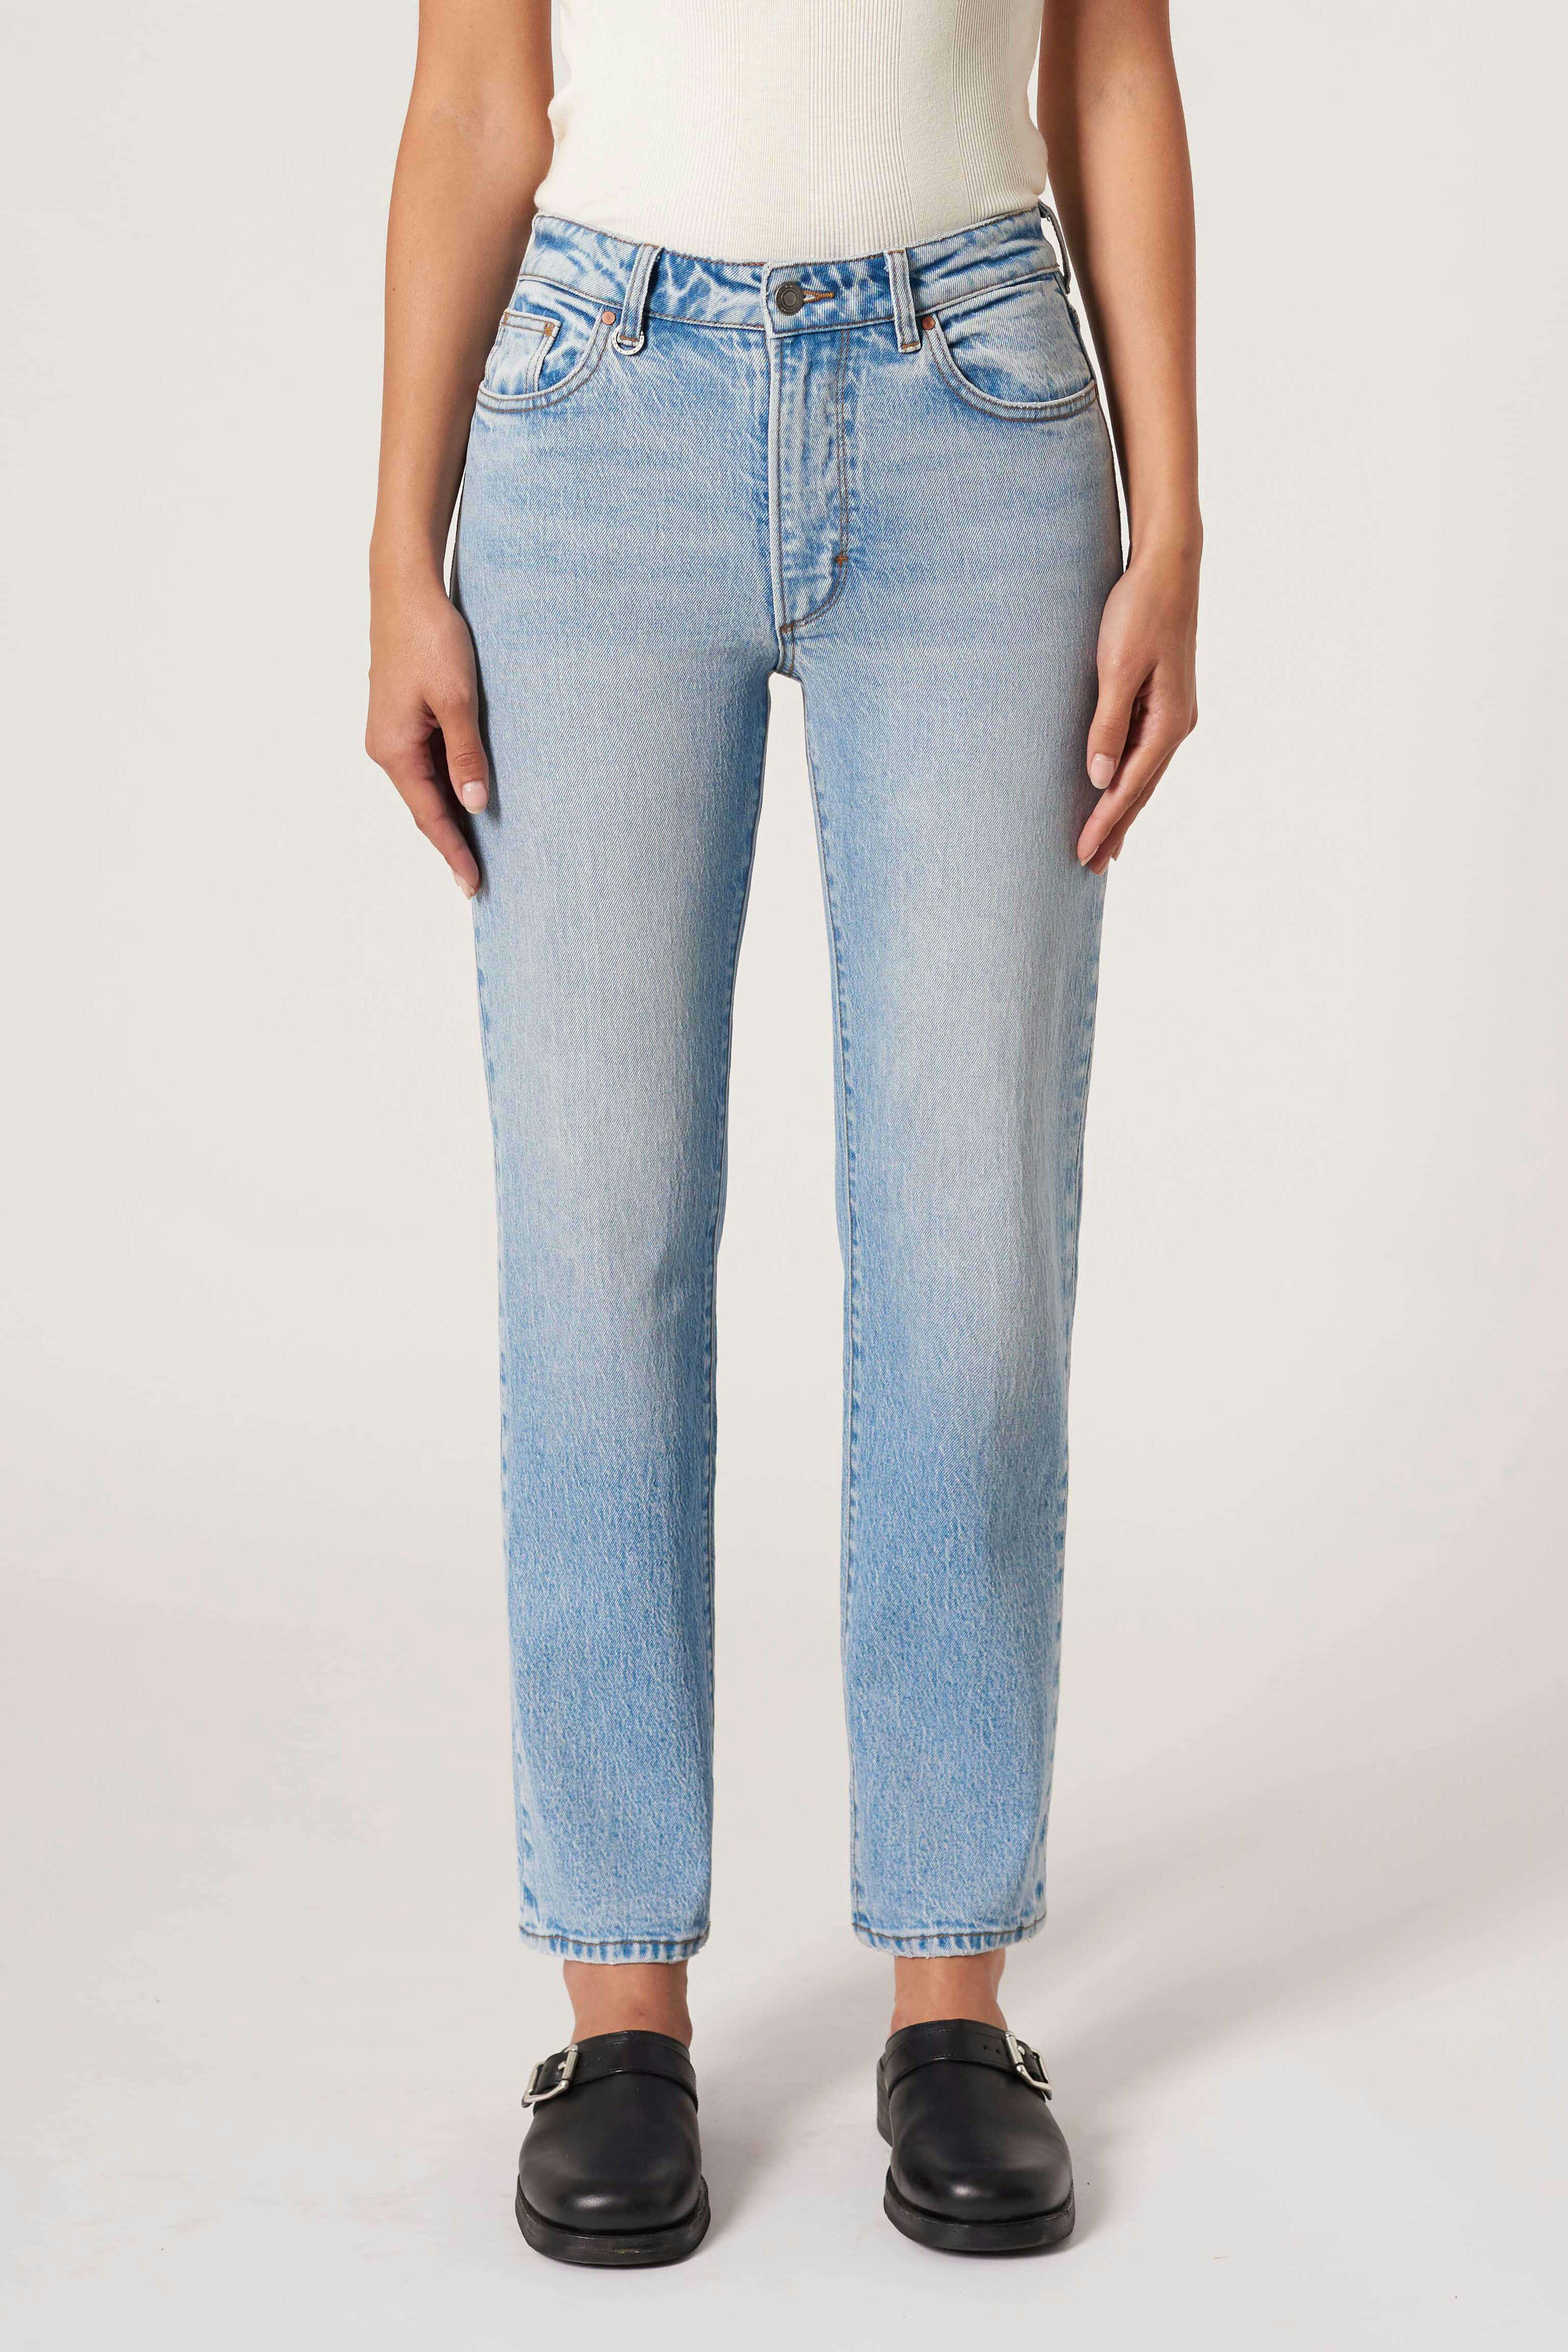 Mica Straight - Pasadena Neuw light lightblue womens-jeans 